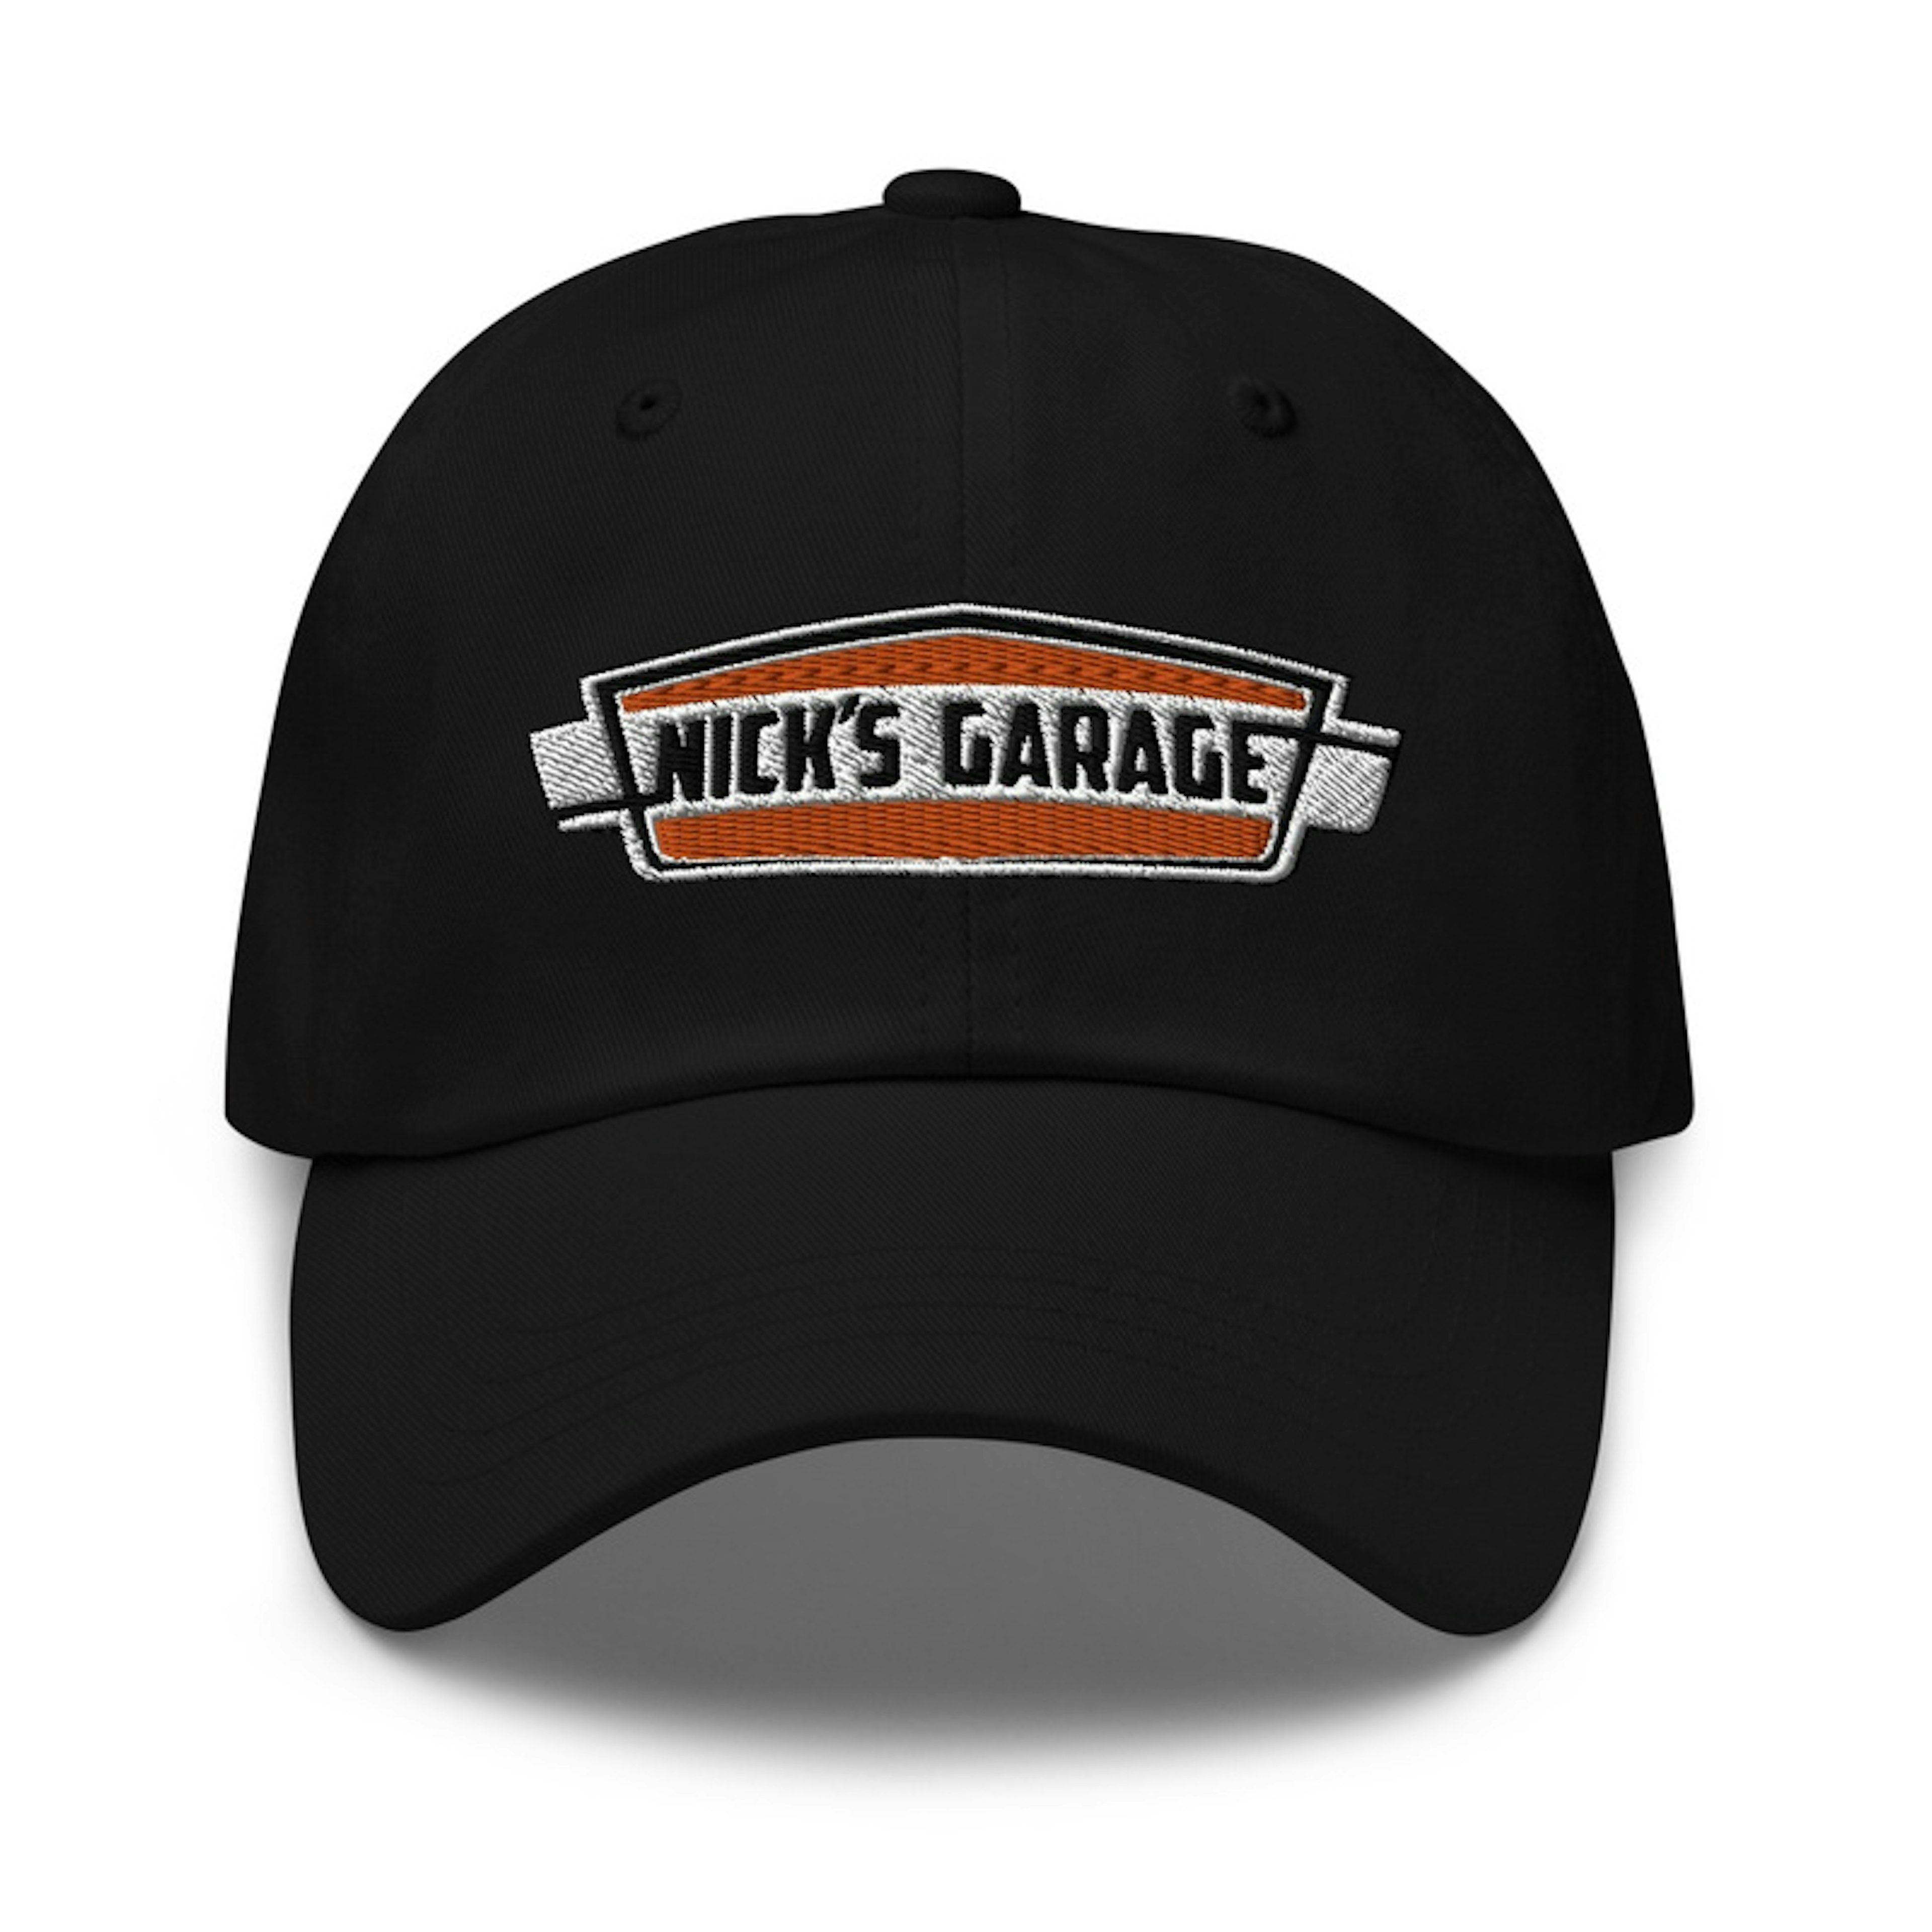 Nick's Garage Embroidered Dad Cap